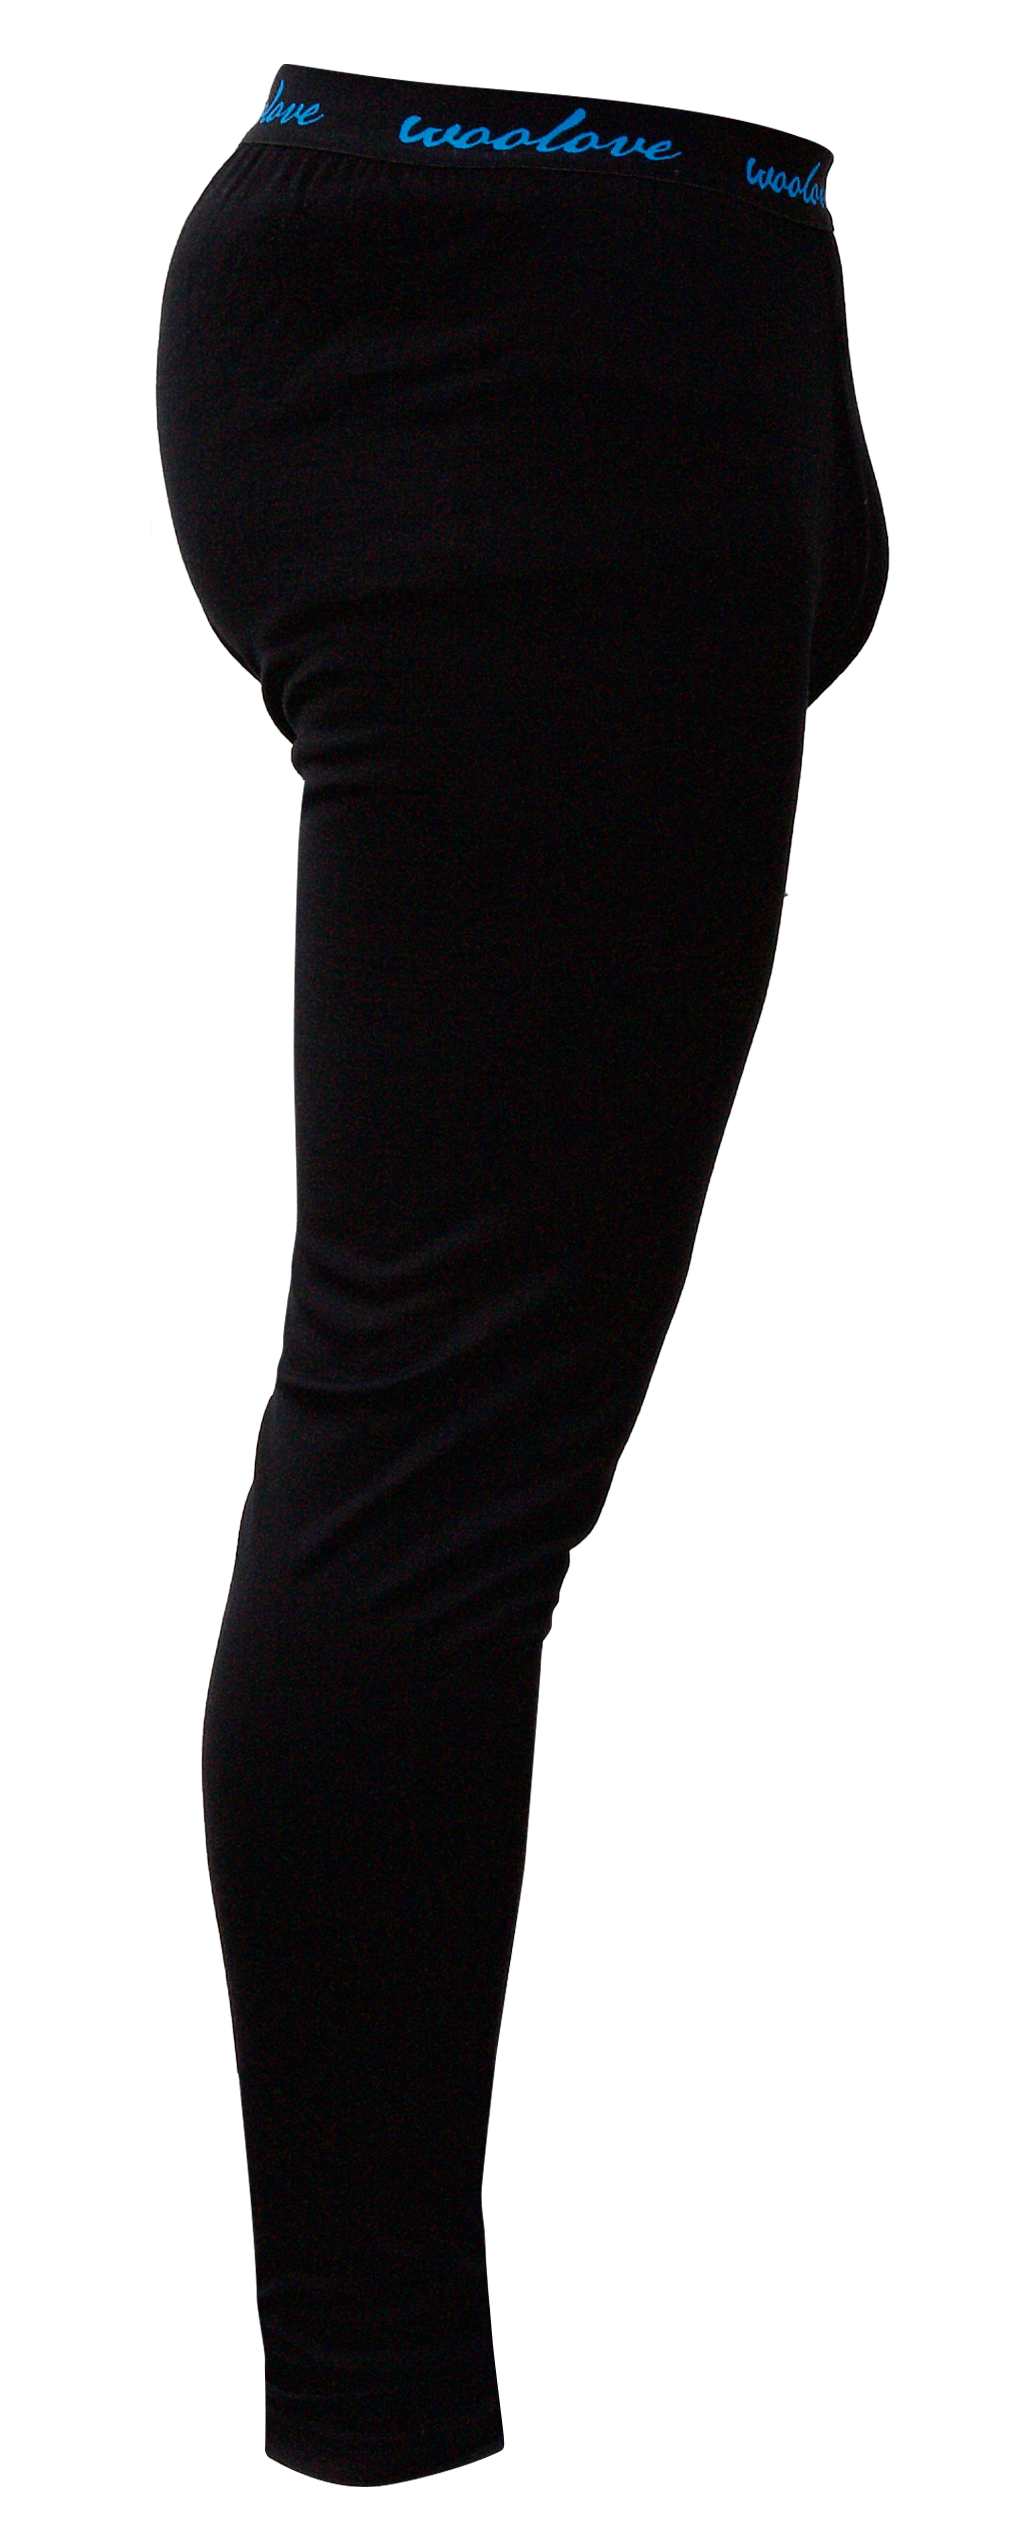 Men's 100% Merino Wool Long Underwear Base Layer Leggings 260g - Heavyweight - Woolove Apparel